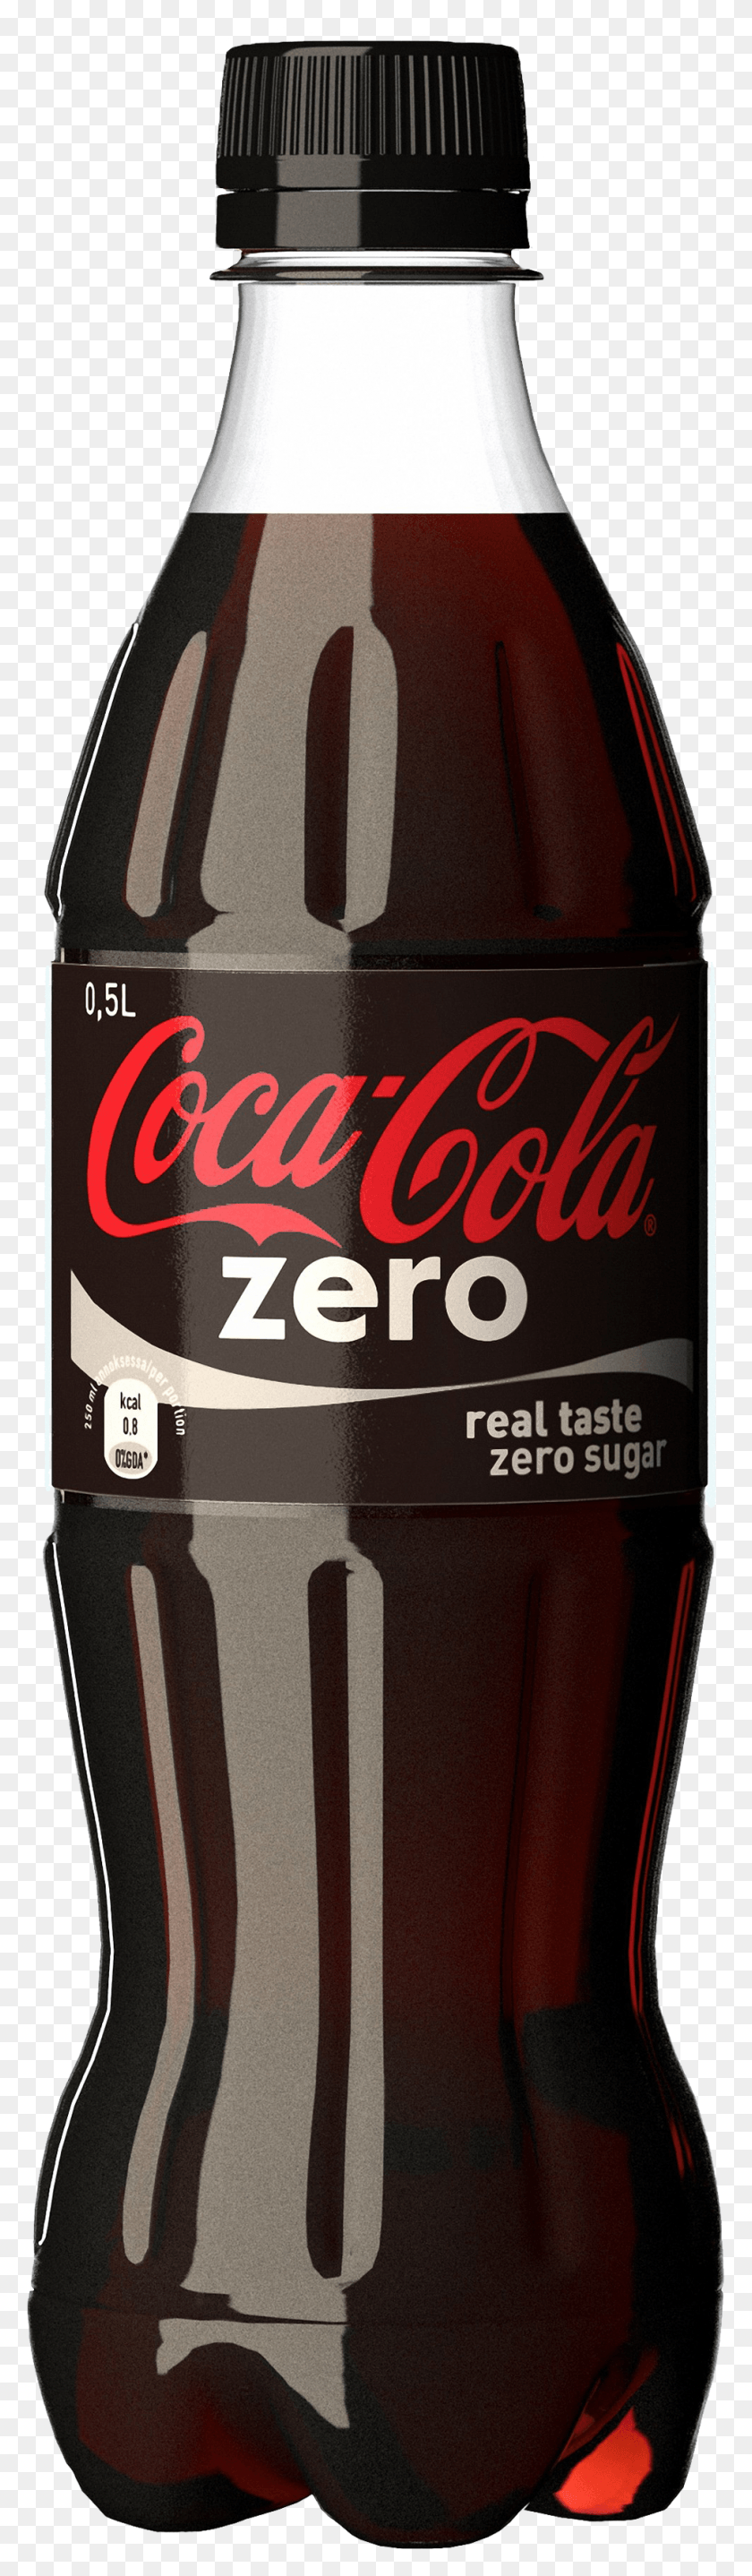 966x3488 Coca Cola Zero Bottle Image Coca Cola Zero, Beverage, Drink, Coke HD PNG Download